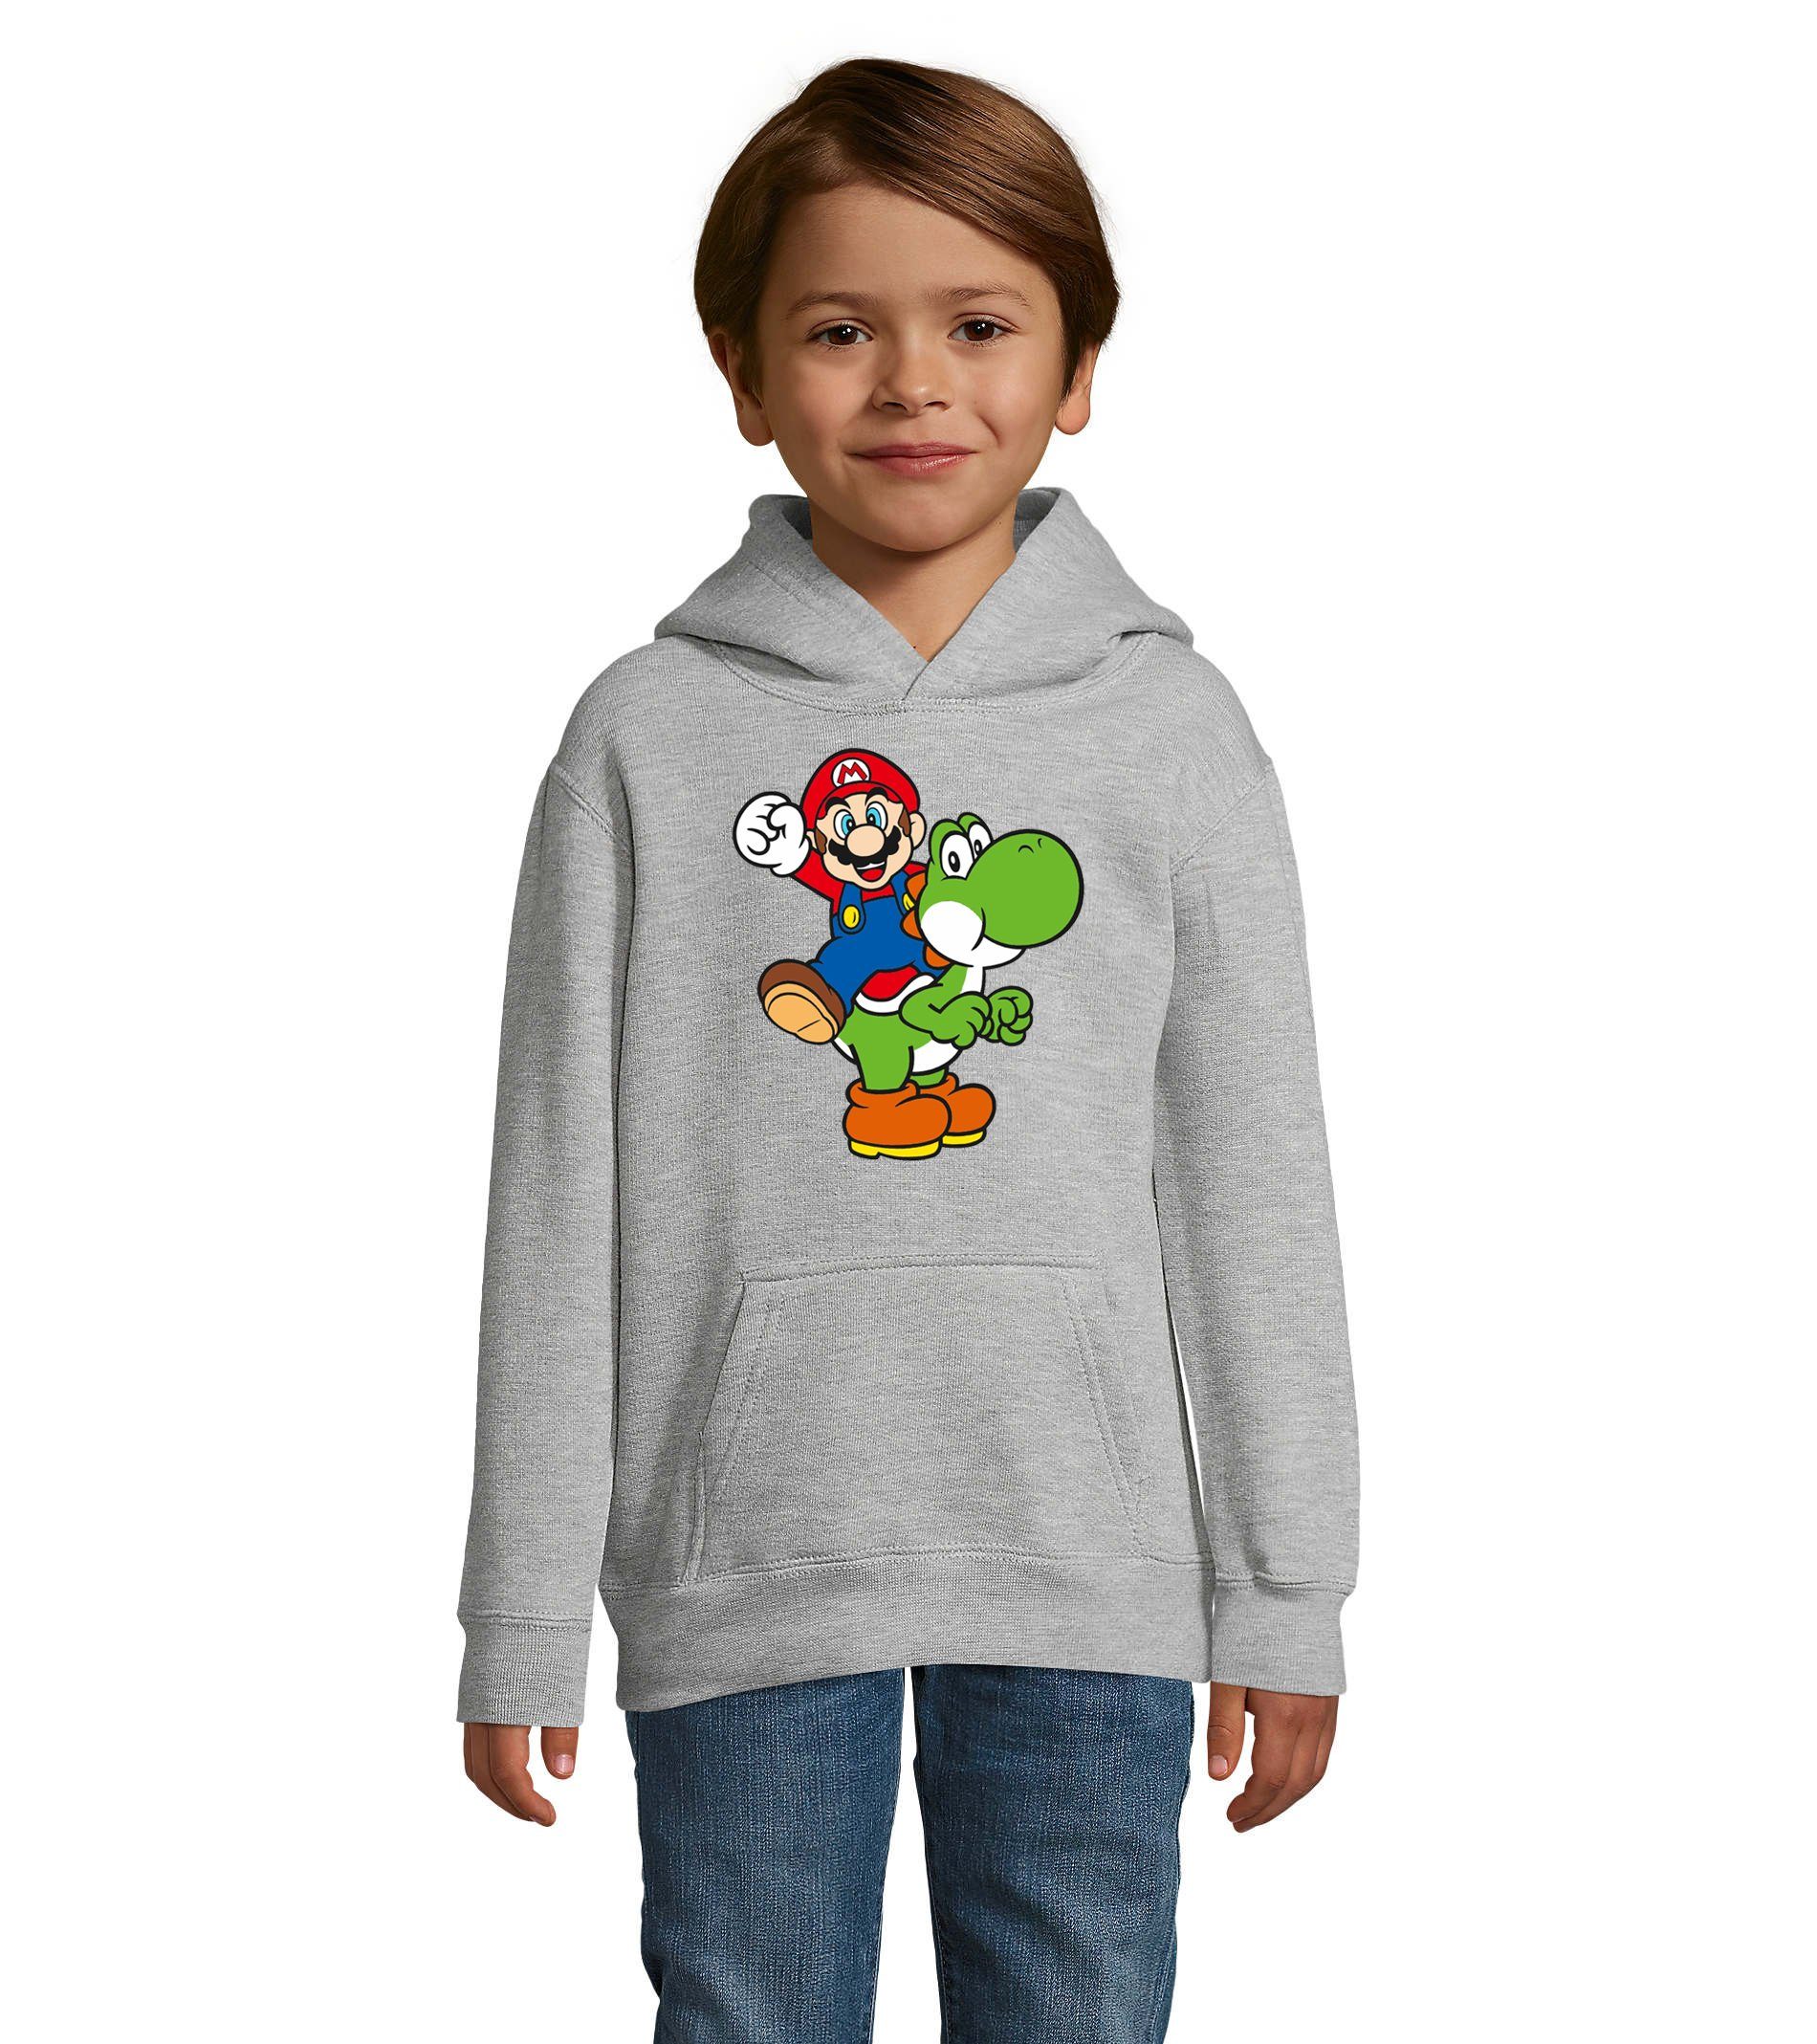 Brownie Super Luigi Mario & Nintendo Yoshi Konsole Blondie & Kinder Grau Hoodie Kaputze mit